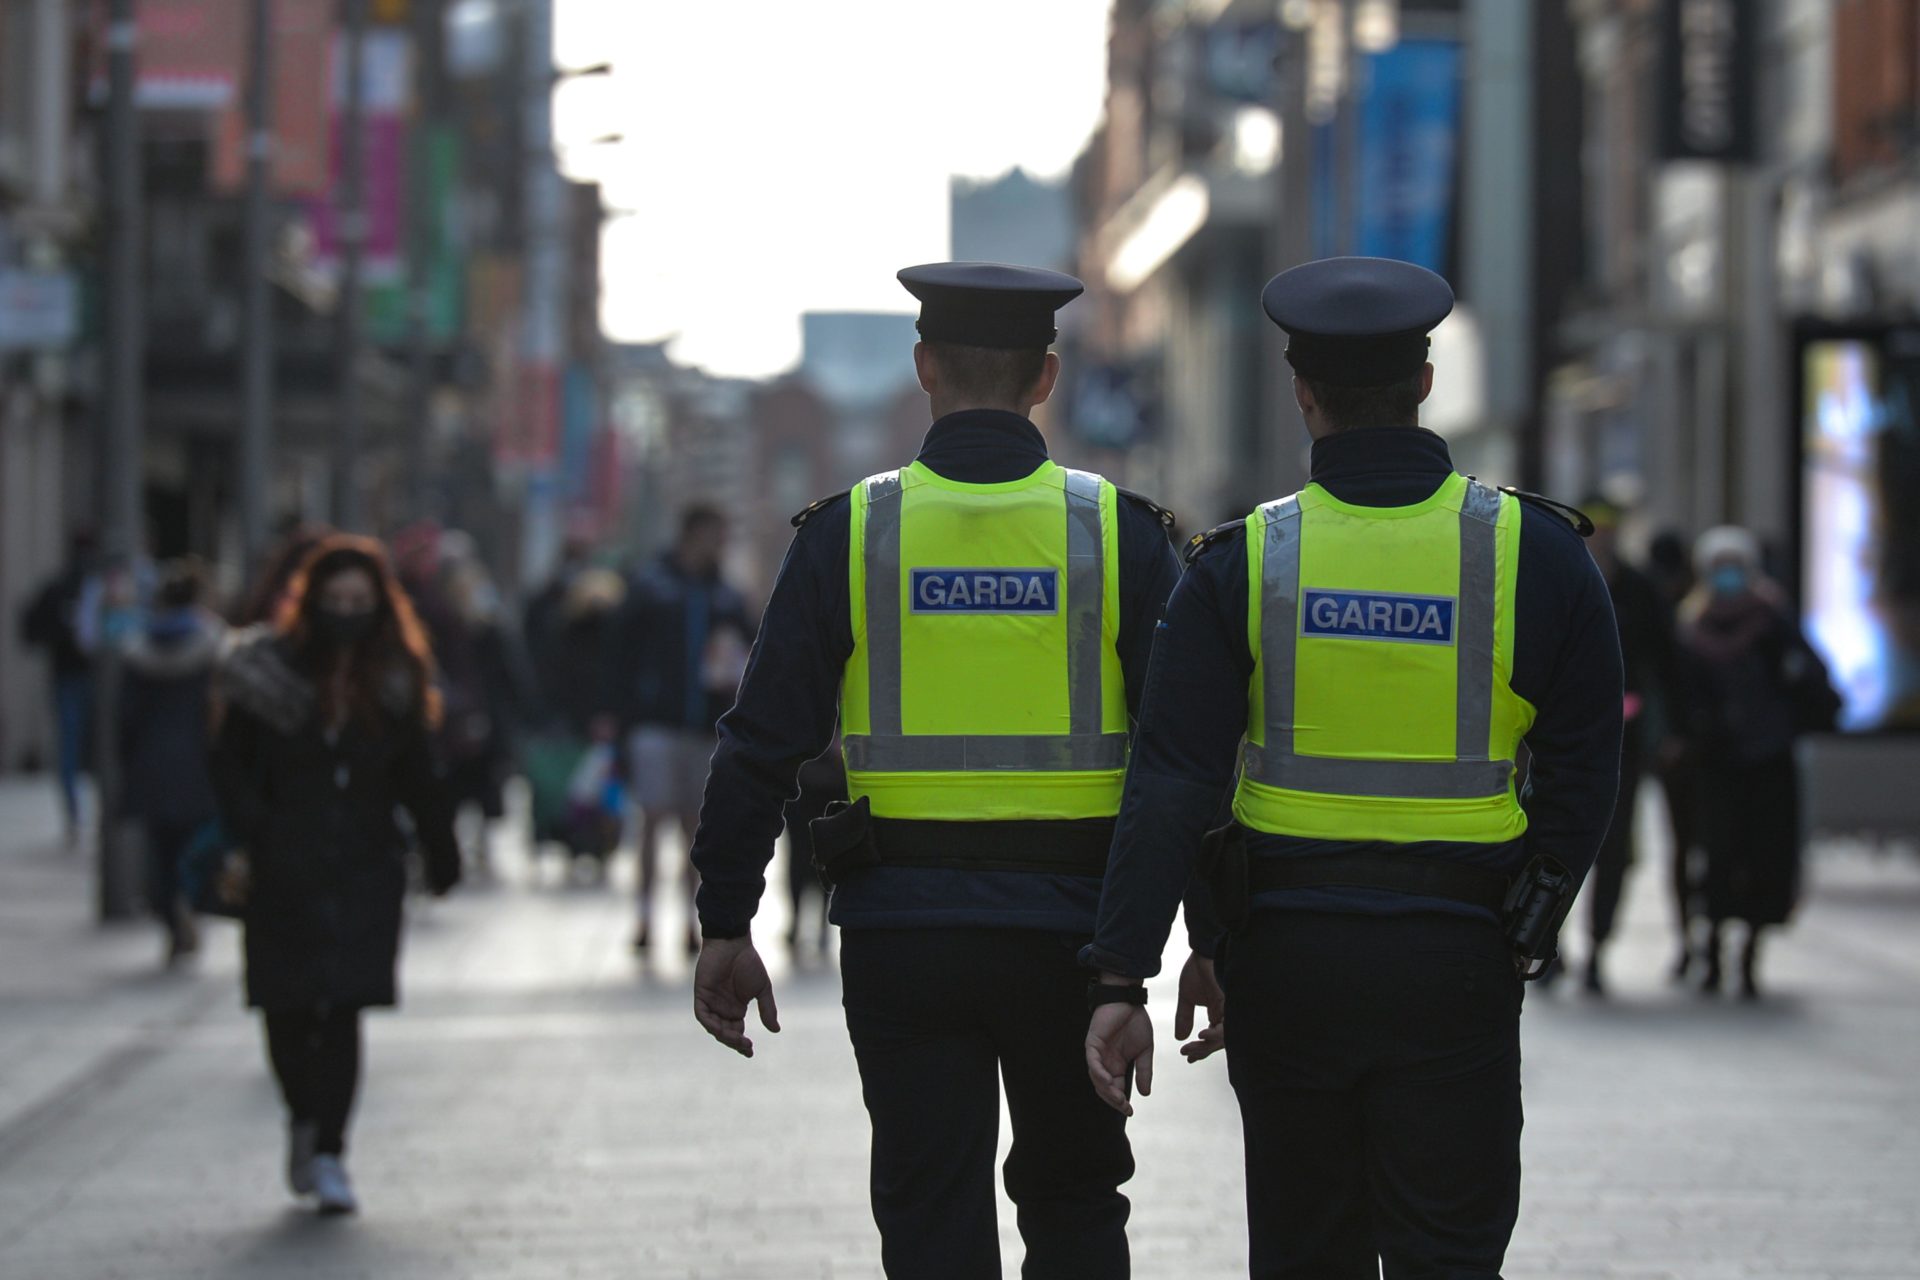 Gardaí patrolling Dublin city centre during Level 5 Covid-19 lockdown. Image: Artur Widak / Alamy